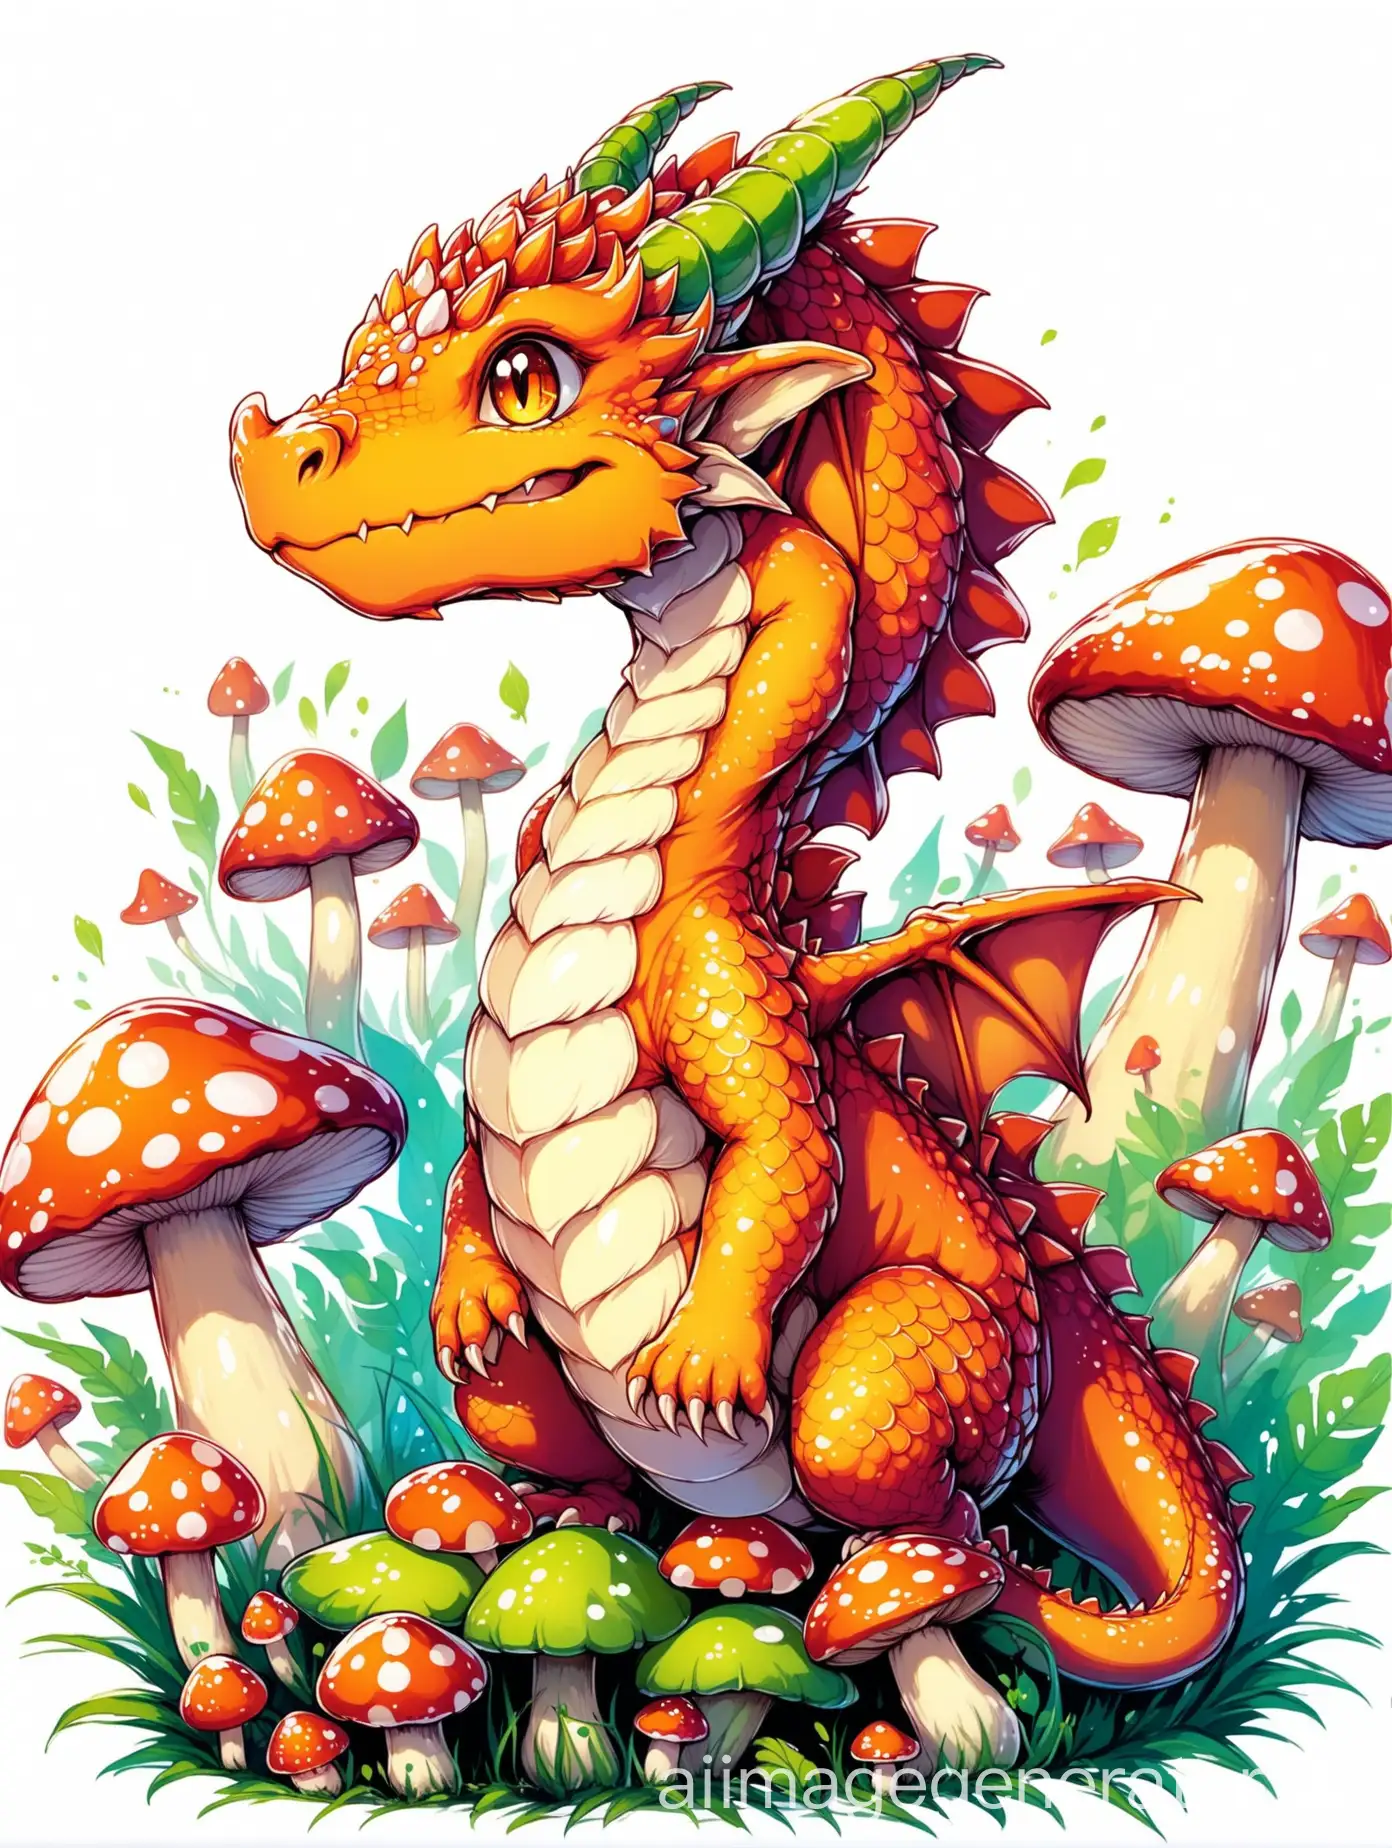 Colorful-Small-Dragon-with-Mushrooms-Vibrant-Fantasy-Illustration